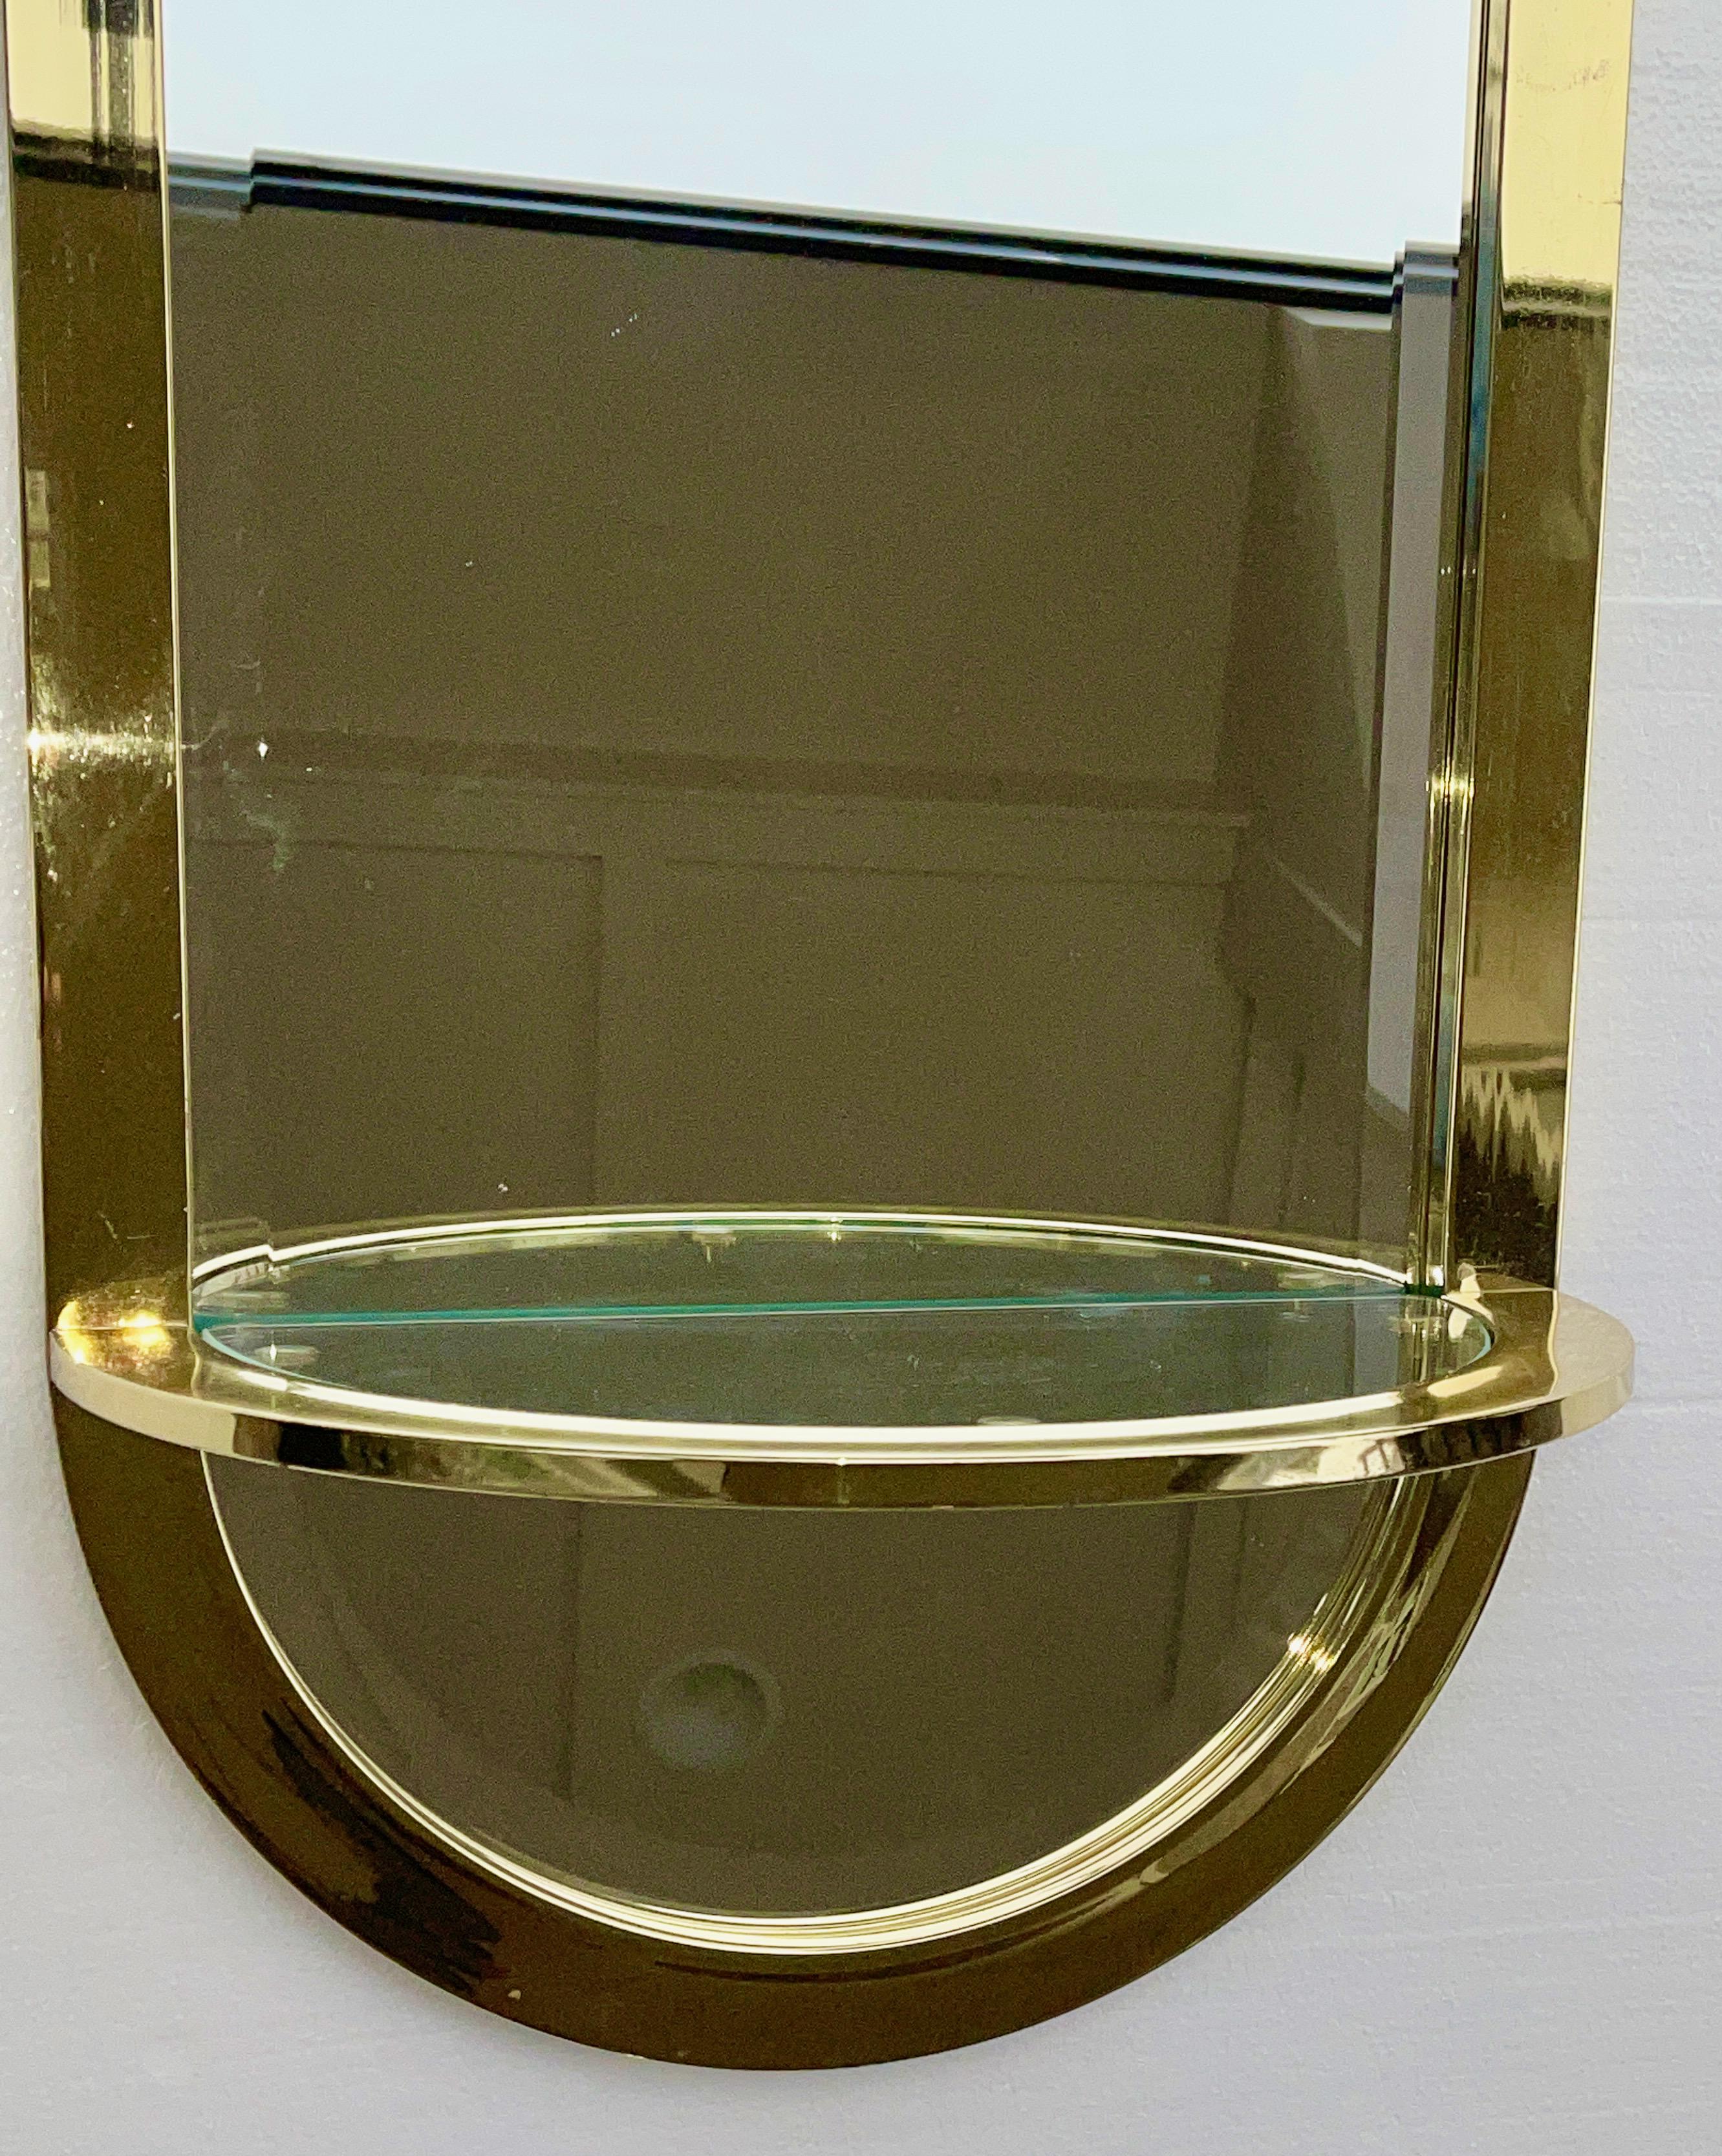 DIA Design Institute America Brass Racetrack Oval Mirror with Demilune Shelf For Sale 2